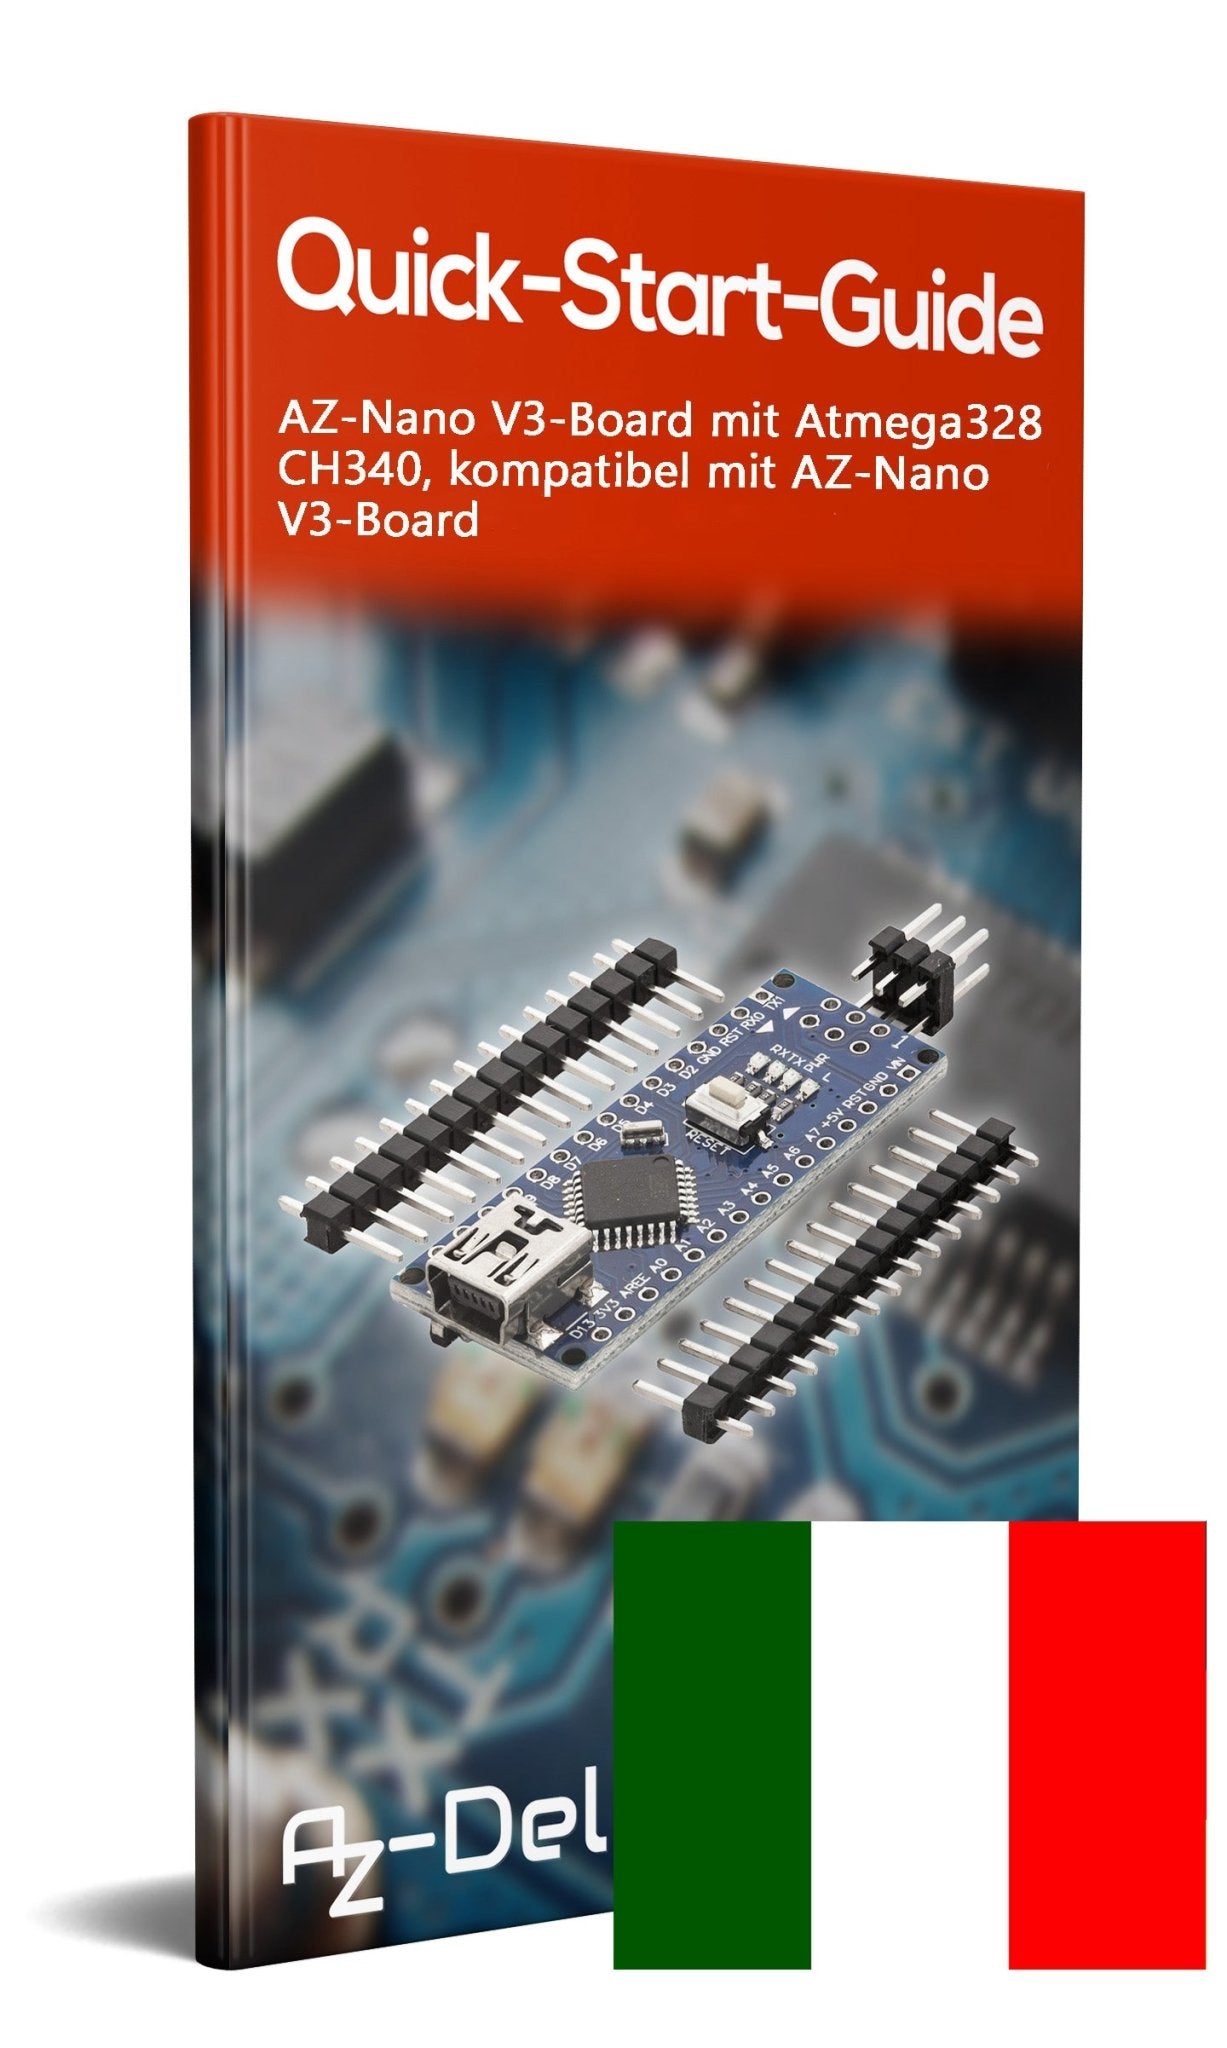 AZ-Nano V3-Board mit Atmega328 CH340! - AZ-Delivery